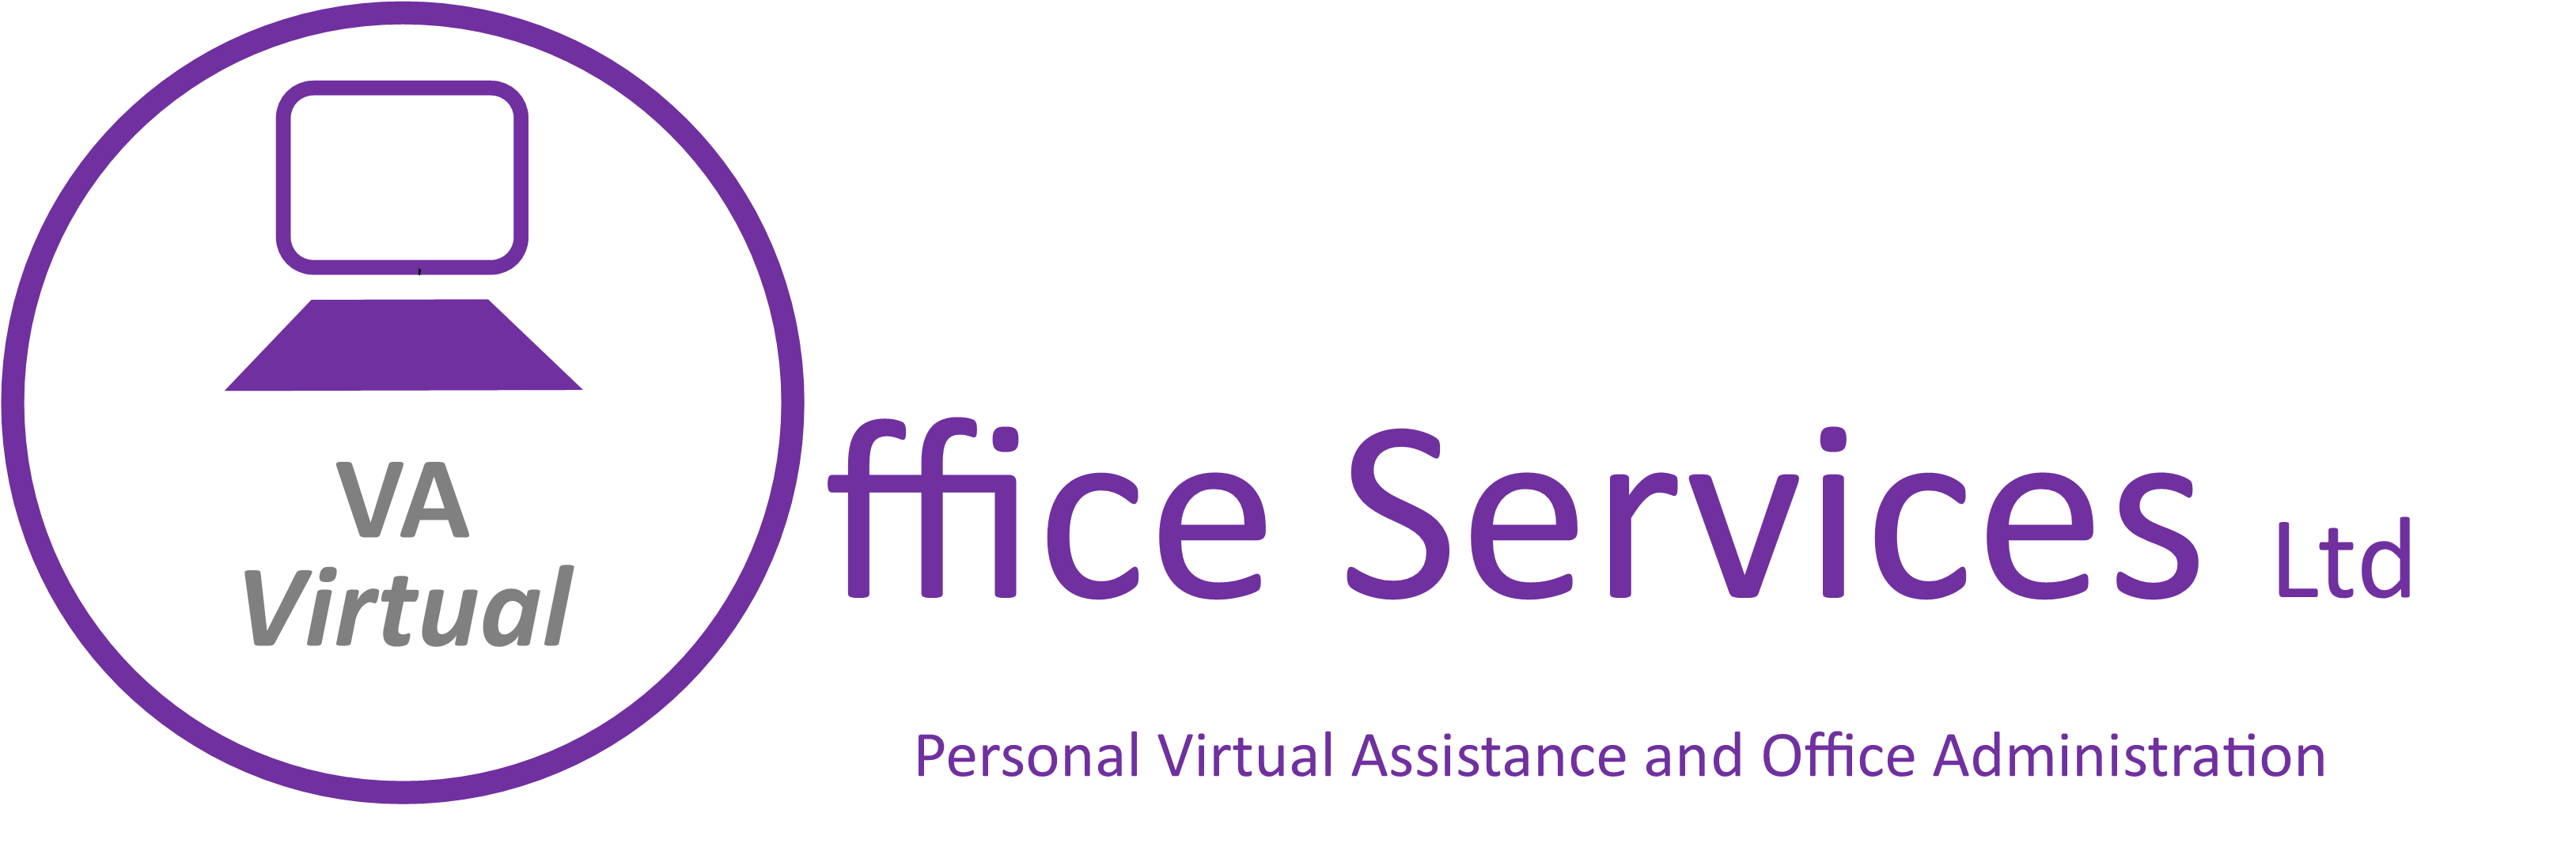 VA Virtual Office Services Ltd